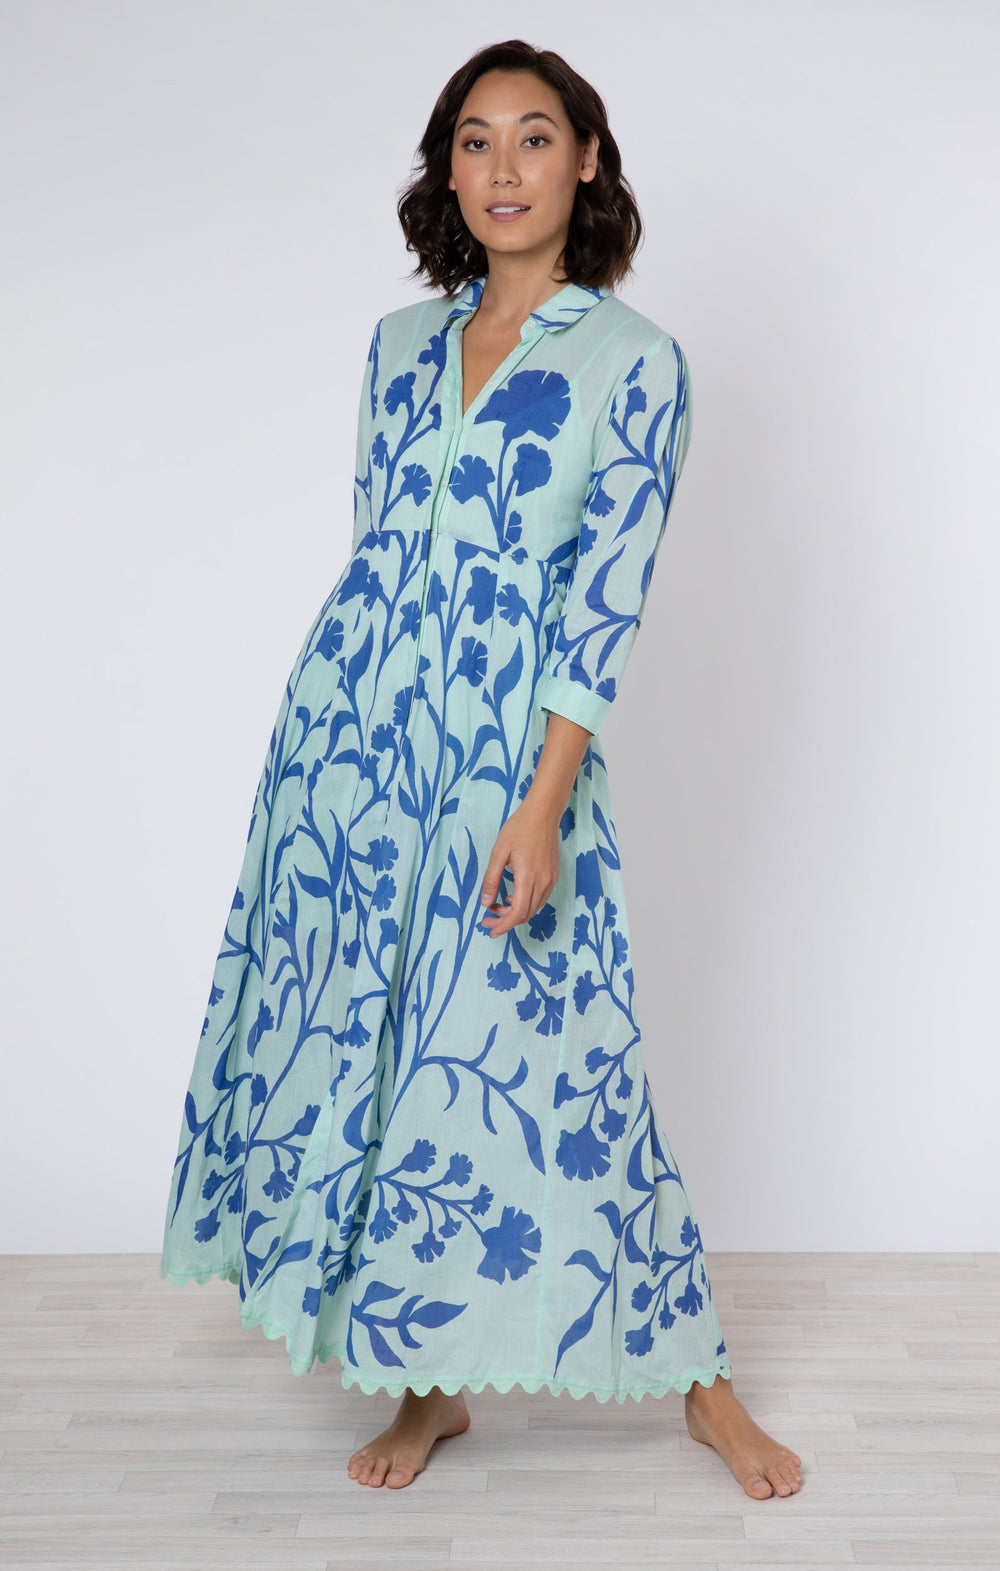 Juliet Dunn Dress Aqua / Blue Maxi Dress w/ Majorelle Print